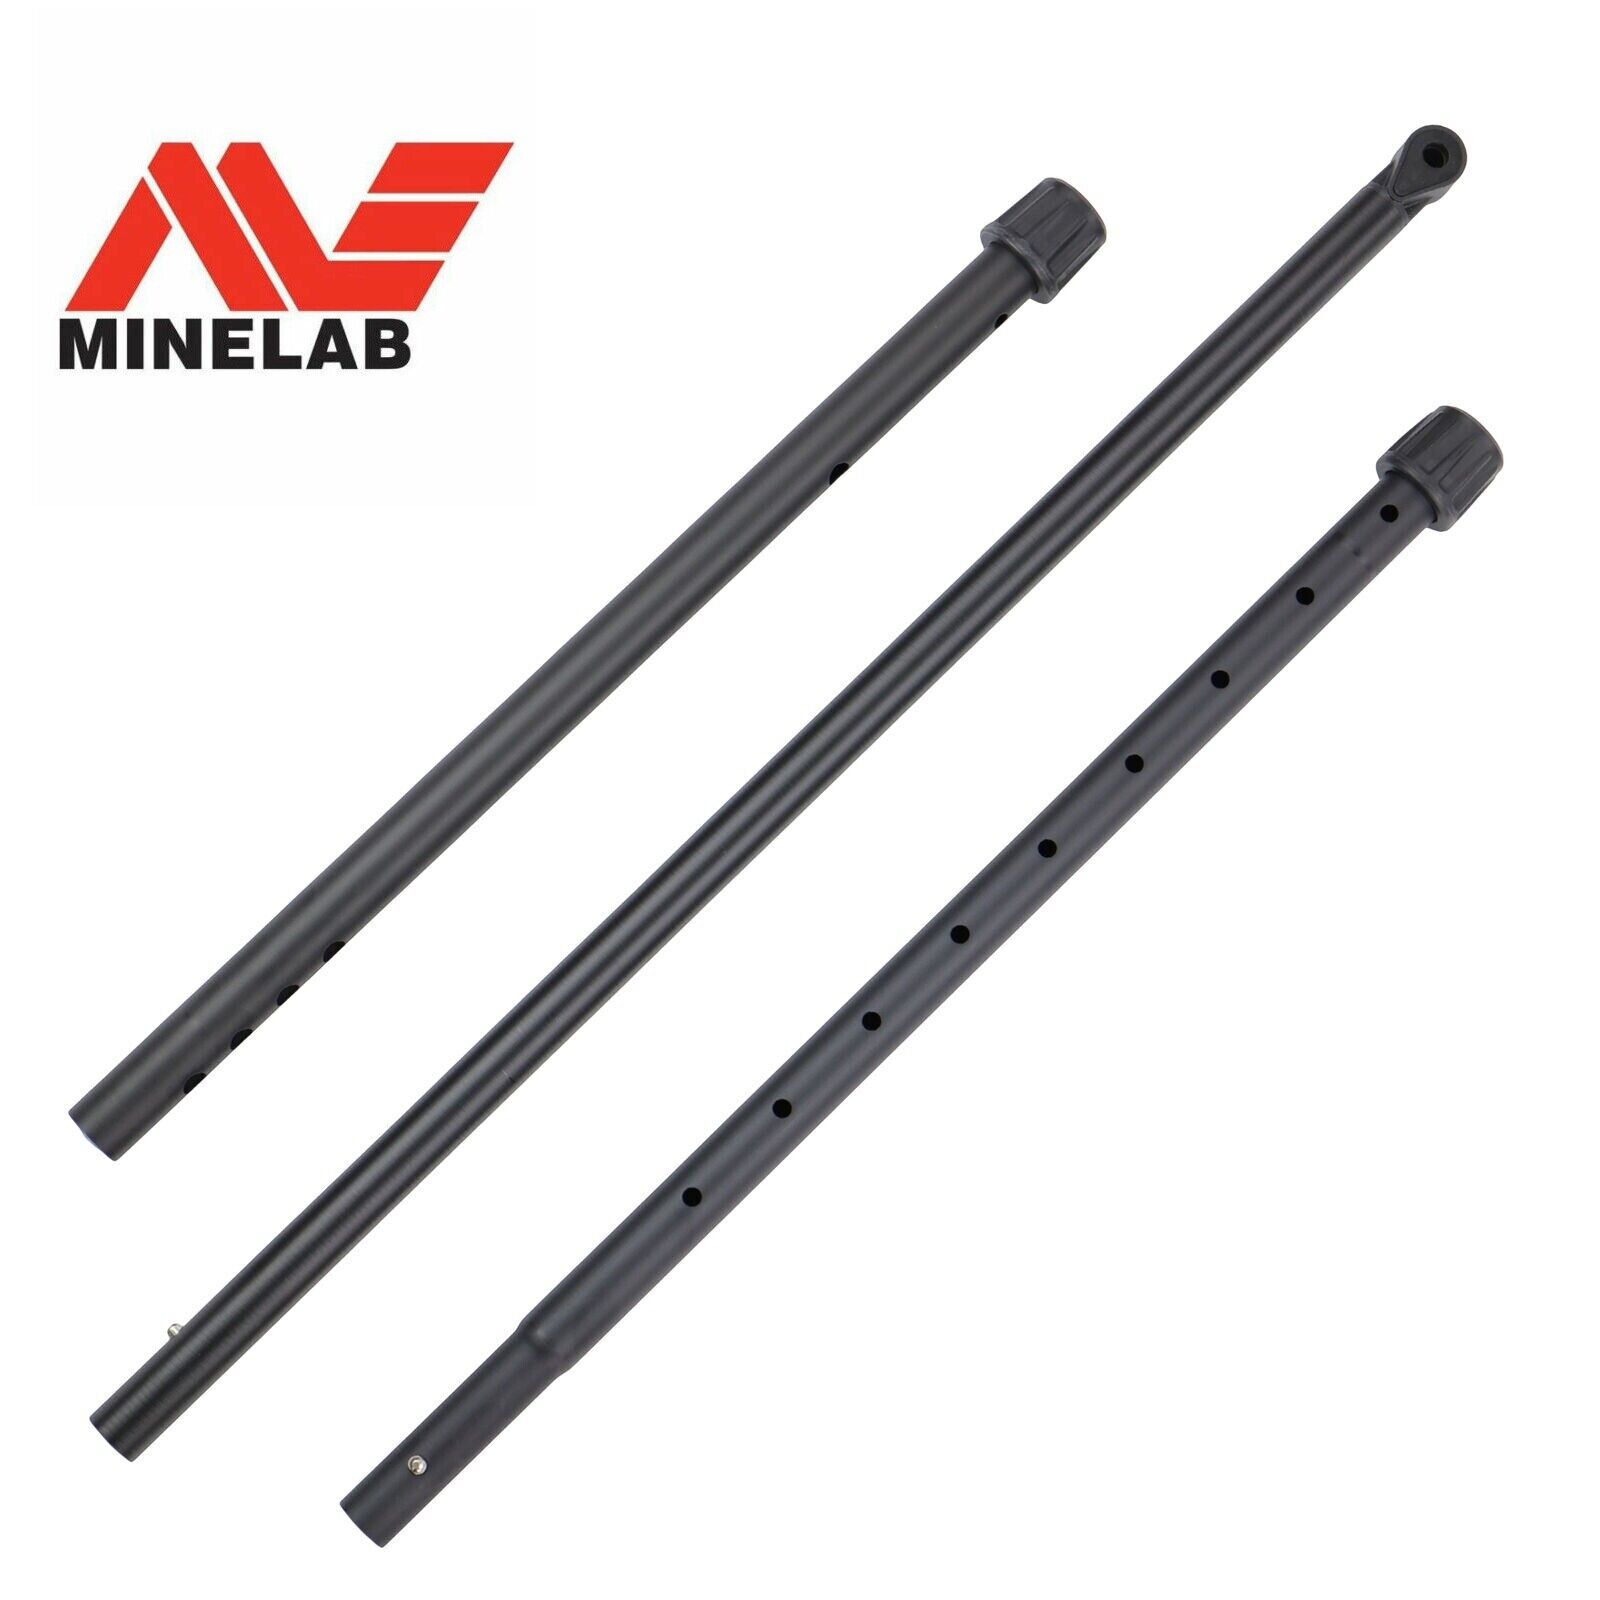 Genuine Minelab Shaft Kit for Equinox Series 800 600 Metal Detectors 3011-0400